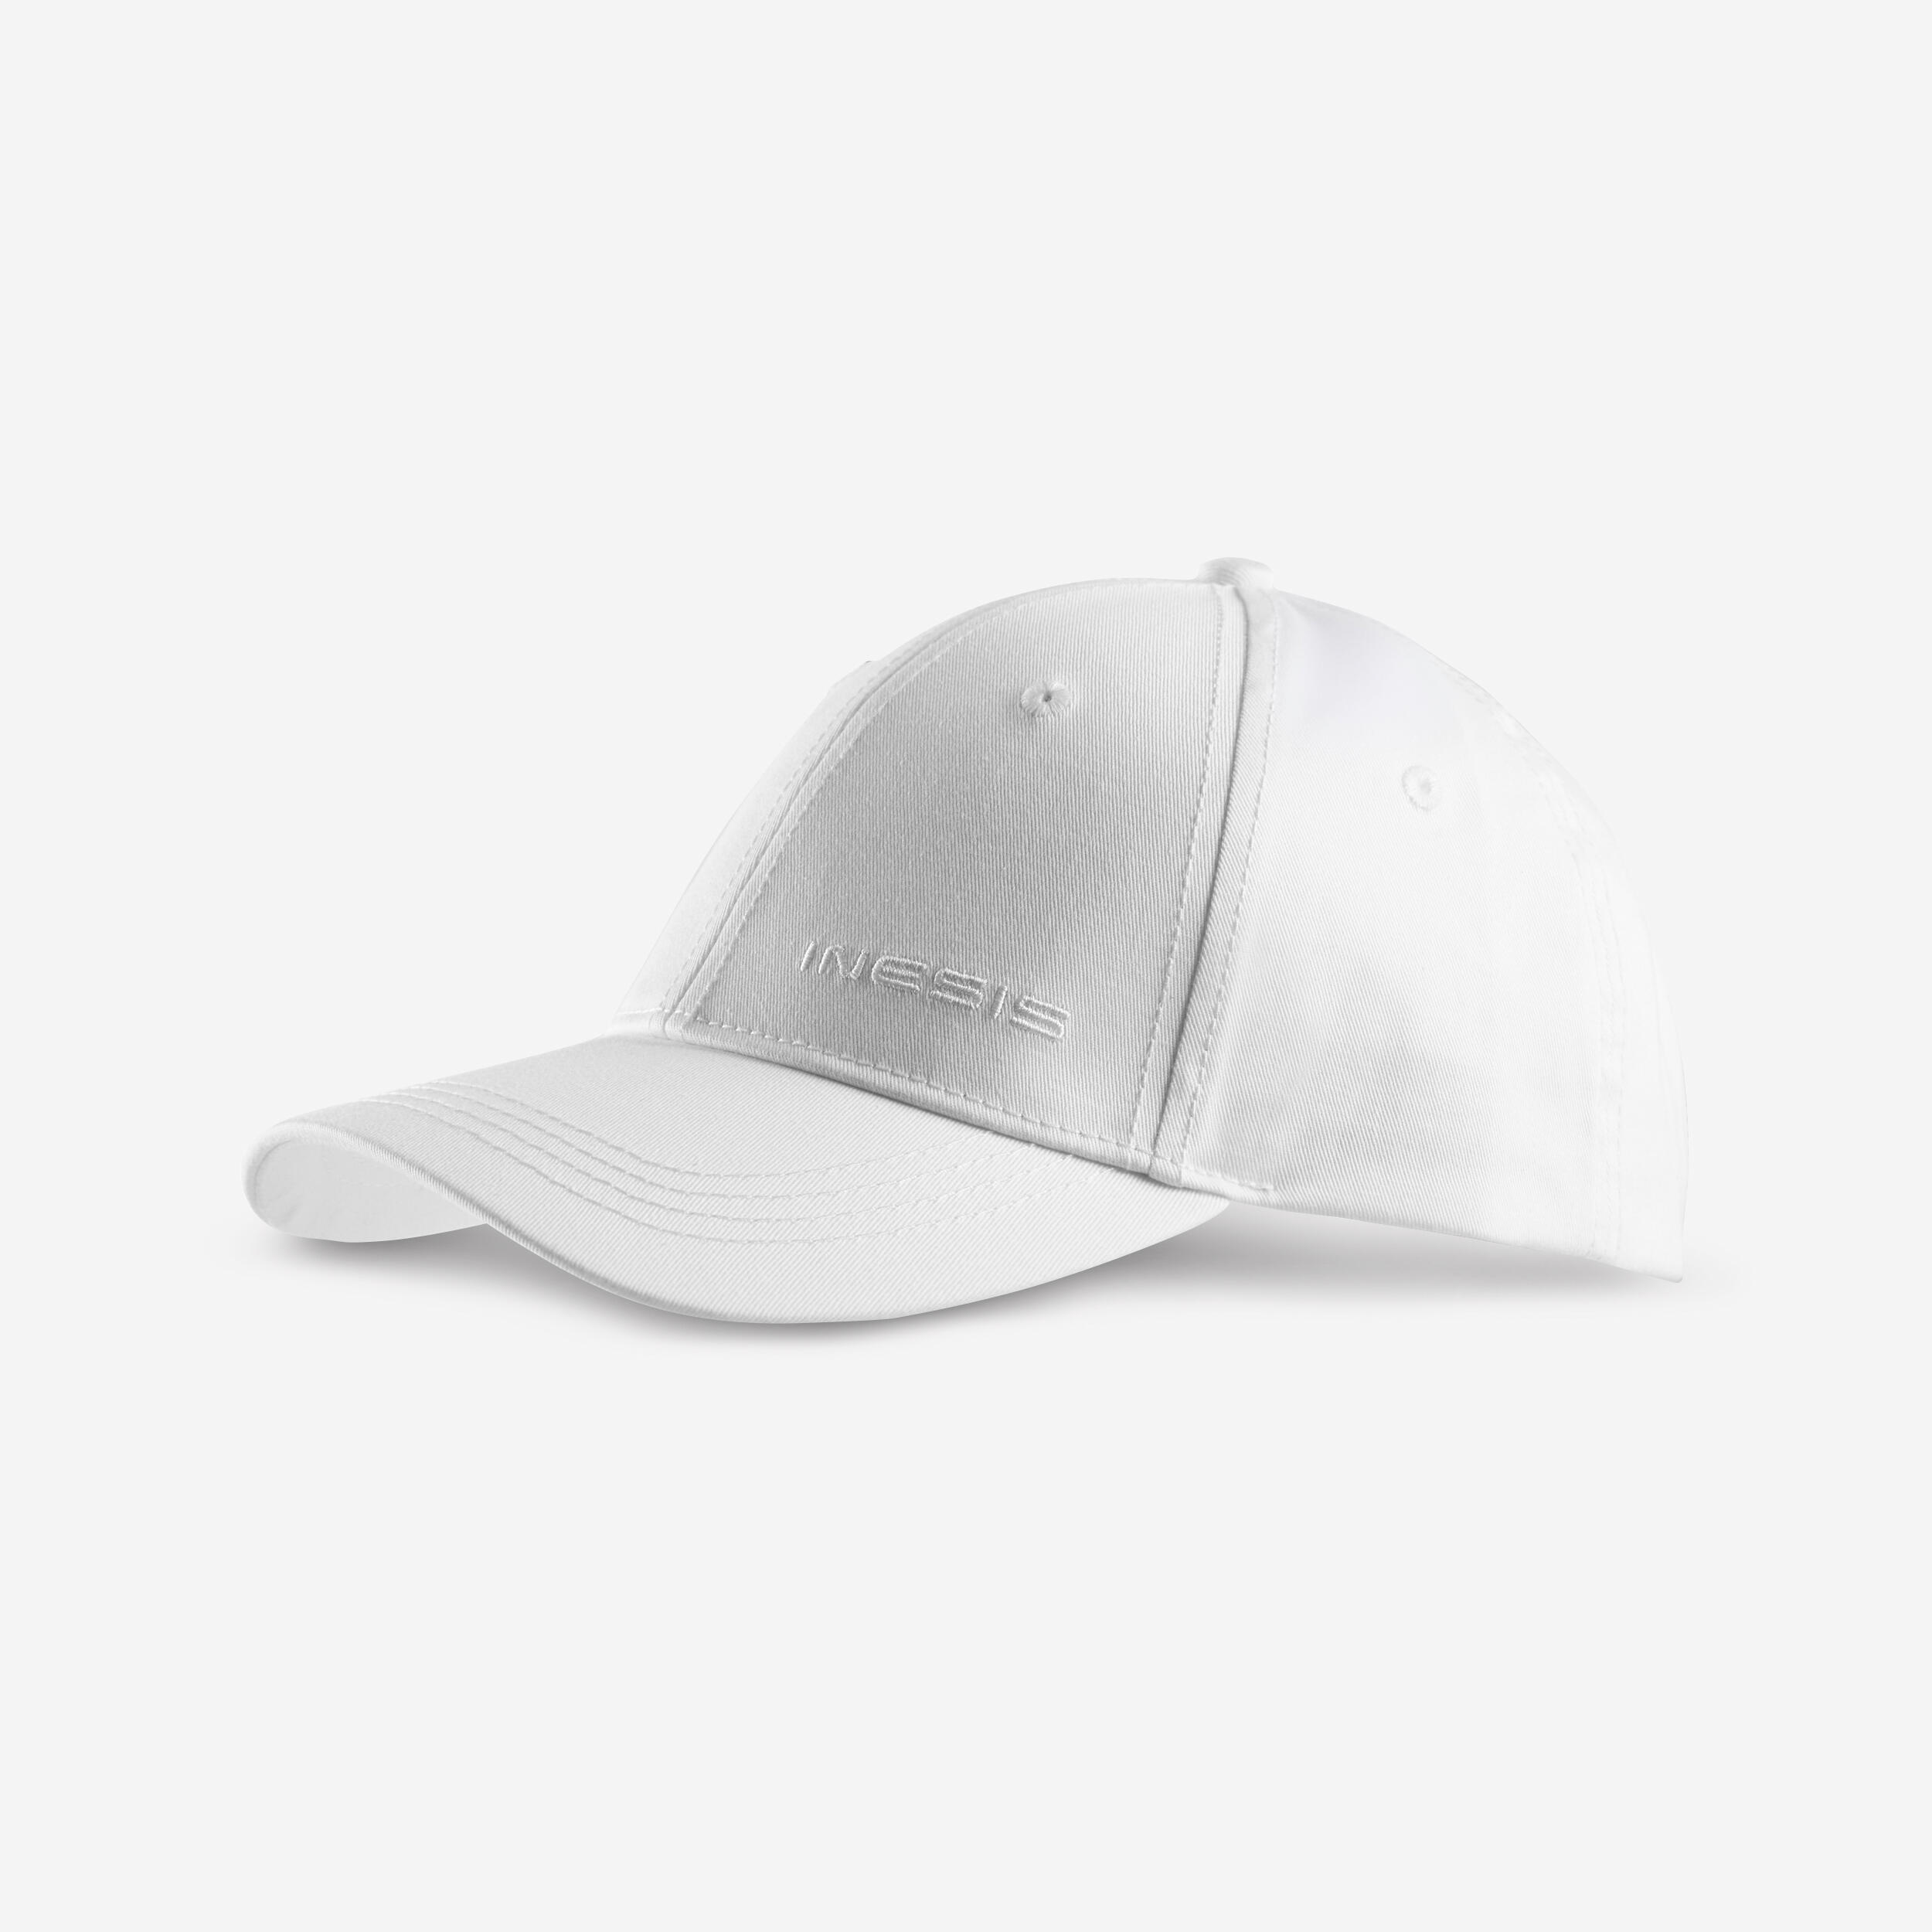 Adults' Golf Cap - MW 500 White 1/5